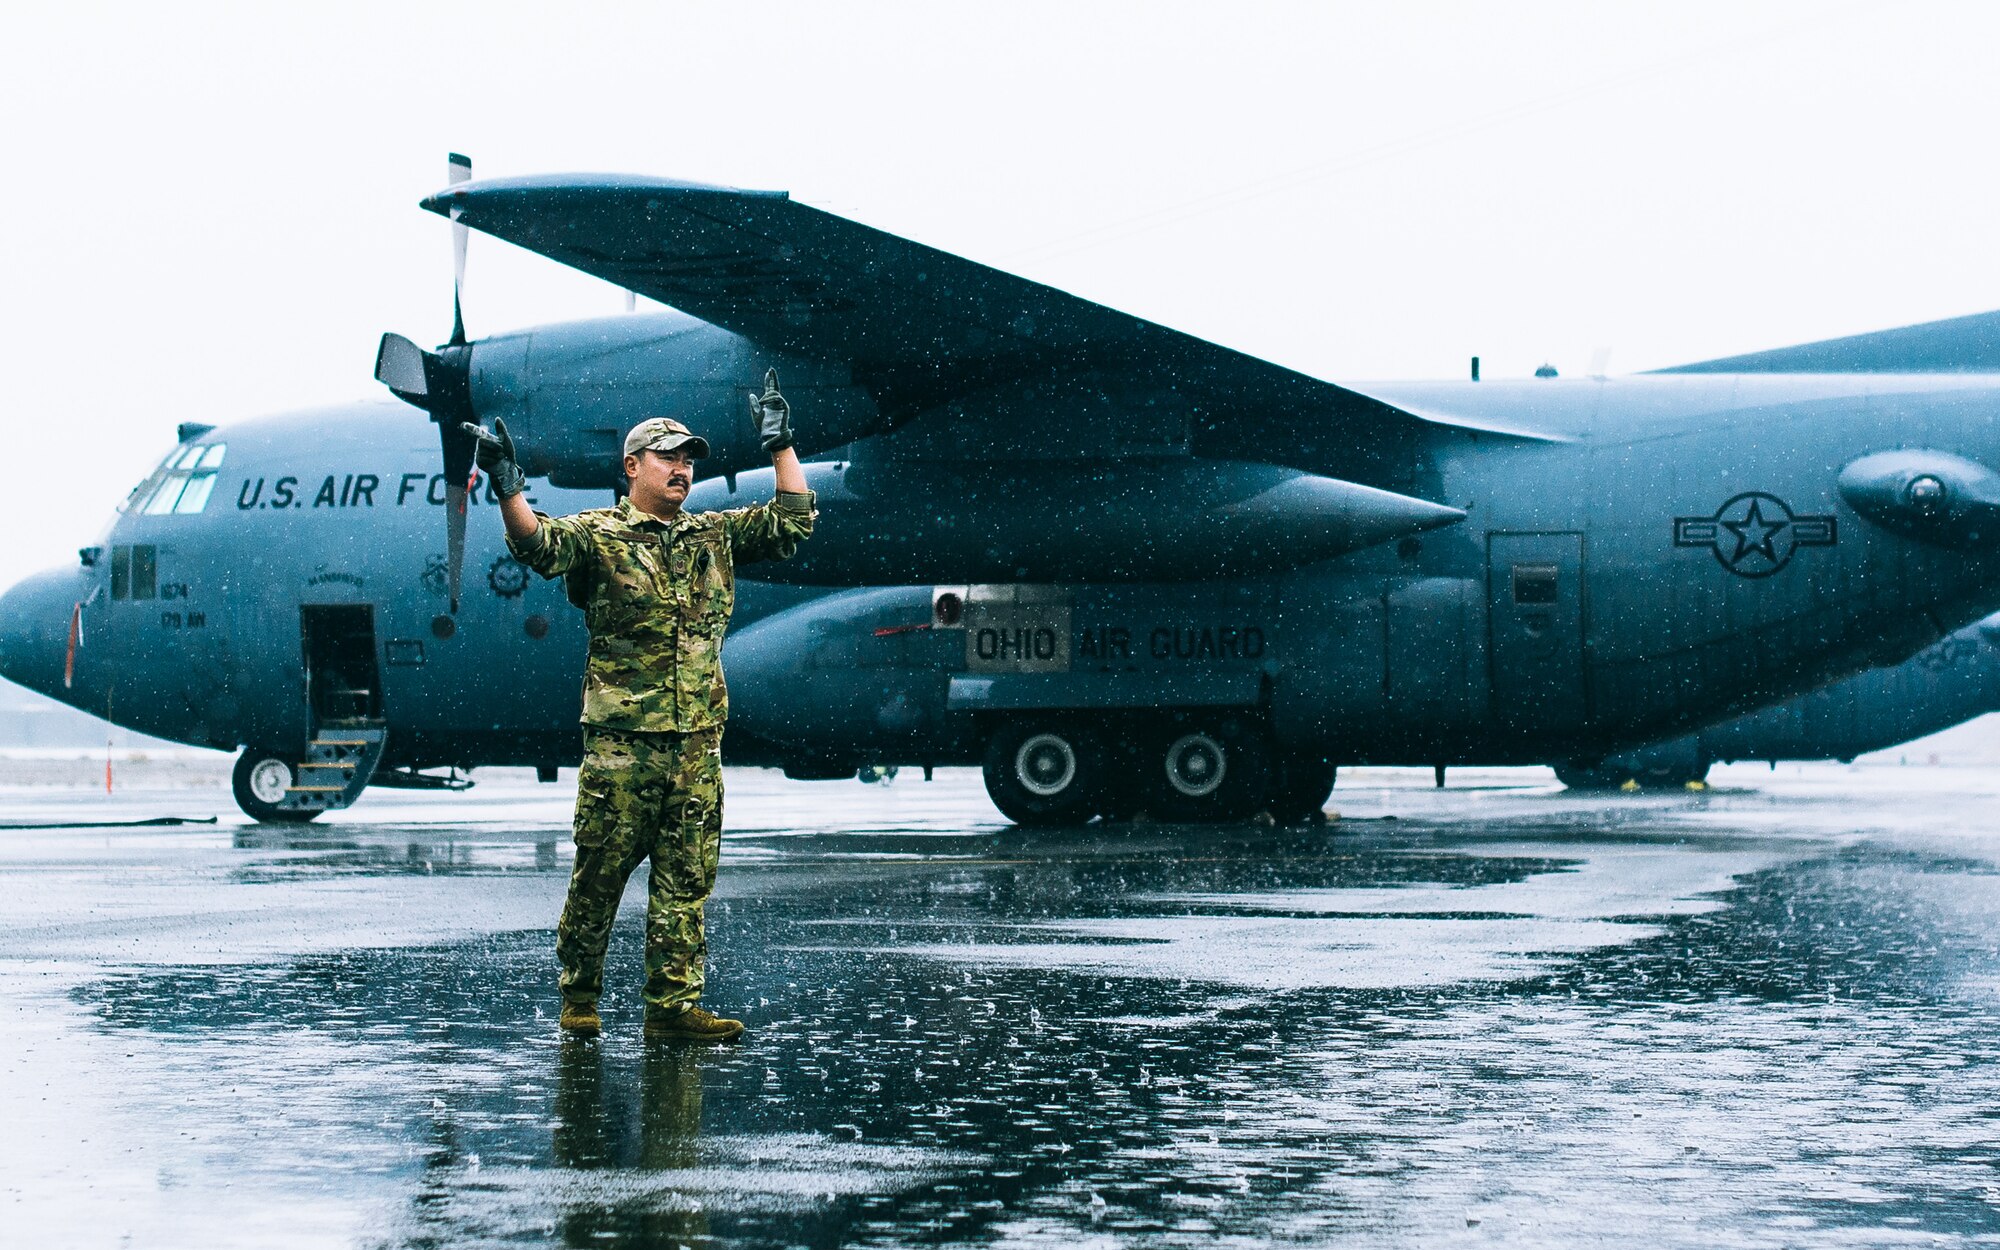 C-130 aircrew delivers combat supplies through air drop